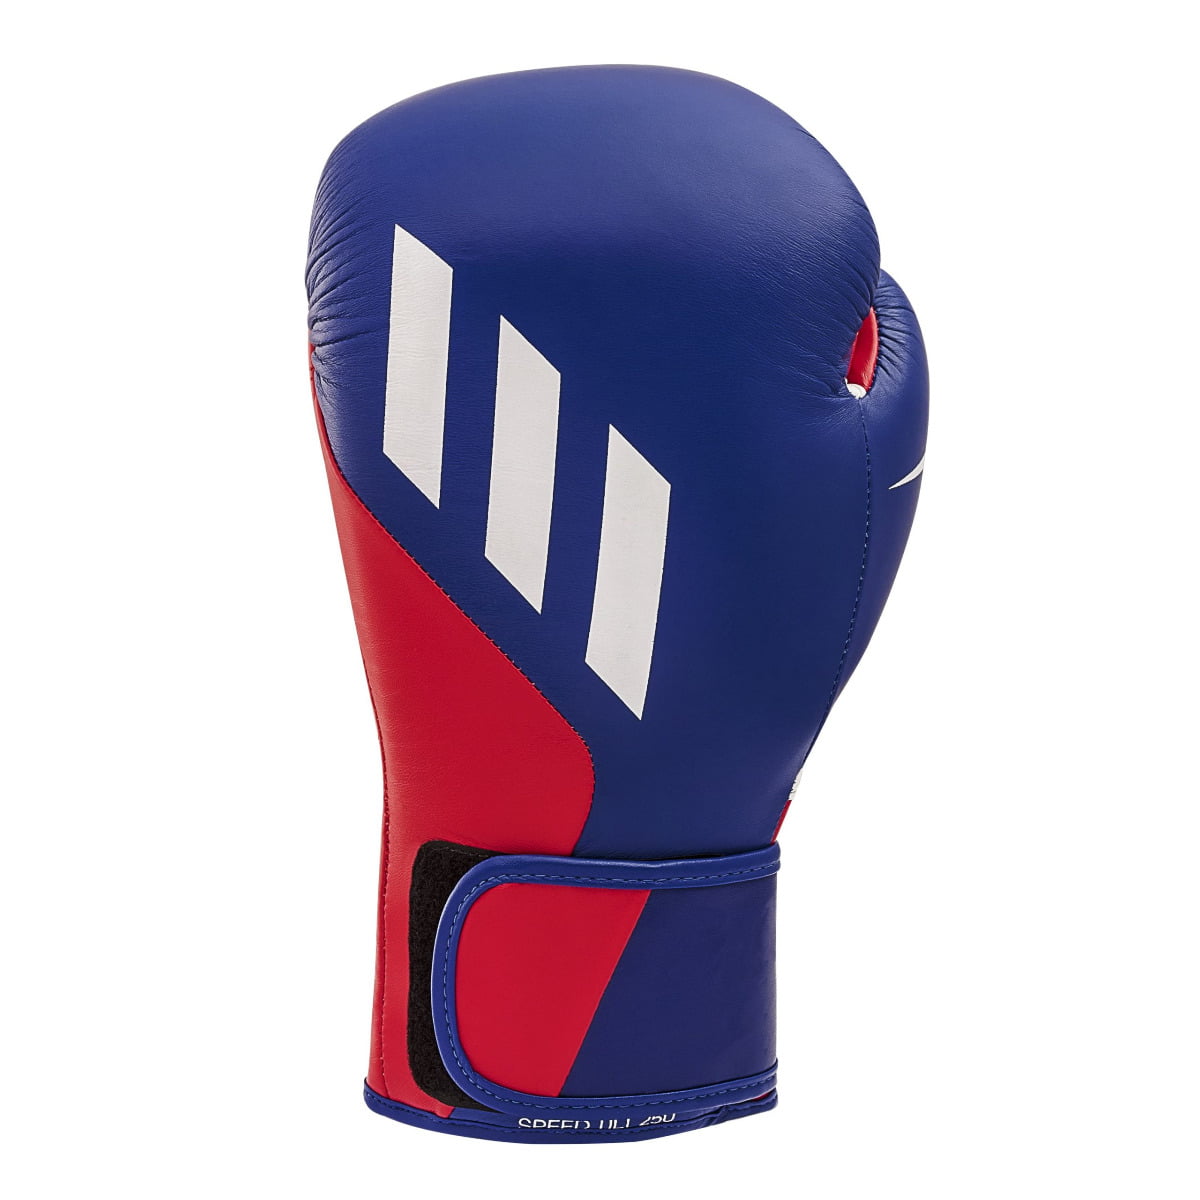 Usnjene boksarske rokavice ''Adidas SPEED 250 TILT blue'' - NOVO!!!